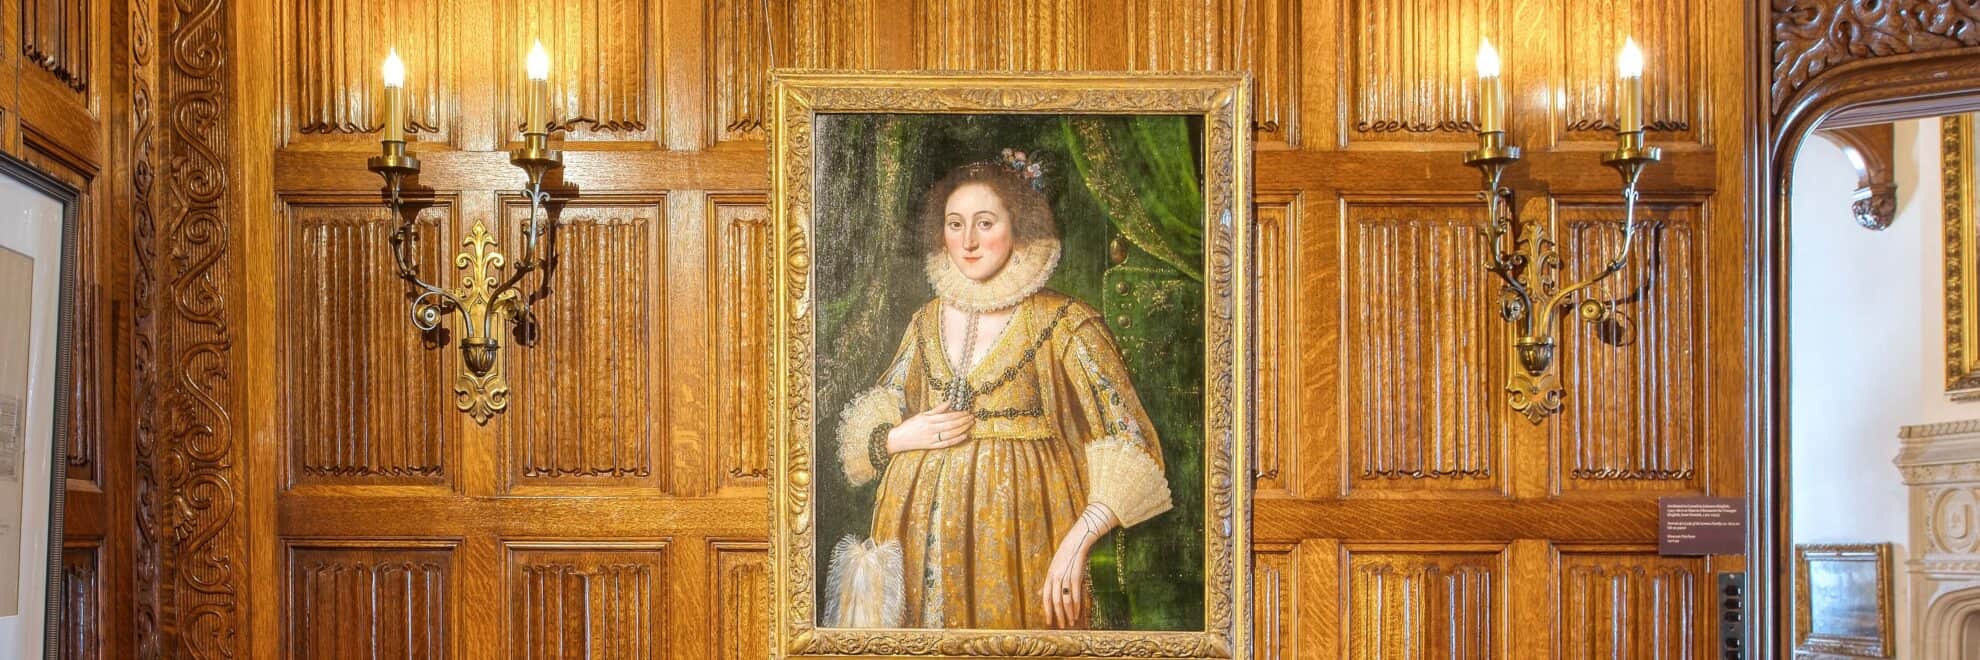 A portrait of (likely) Katherine, wife of Esme Stuart, third Duke of Lennox